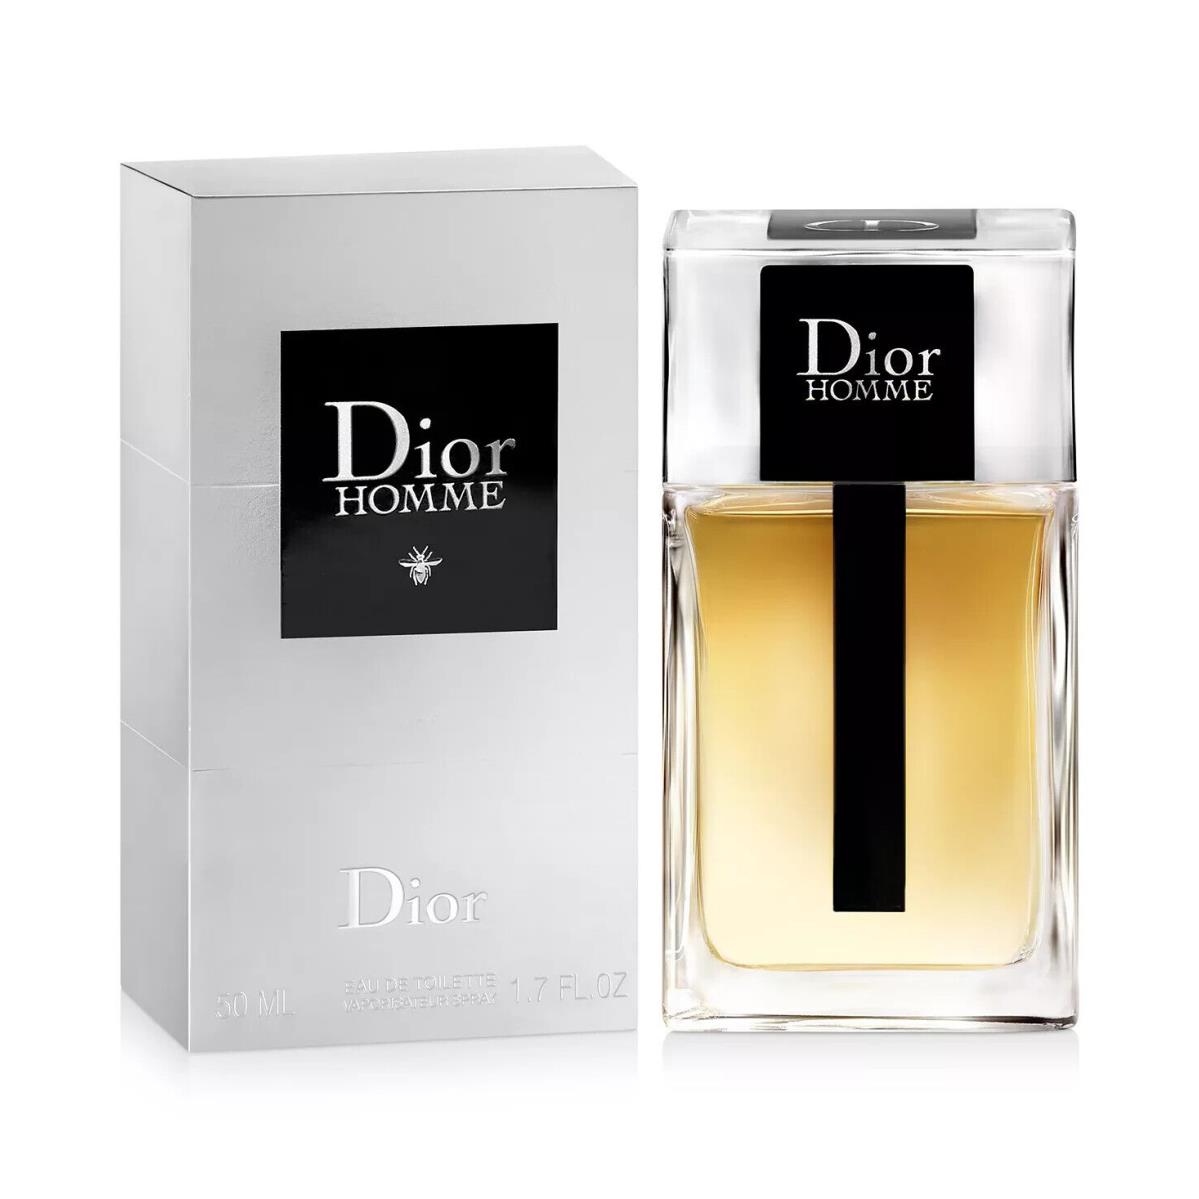 Dior Homme By Christian Dior Eau De Toilette 1.7 Fl. Oz. 50 Ml. Spray